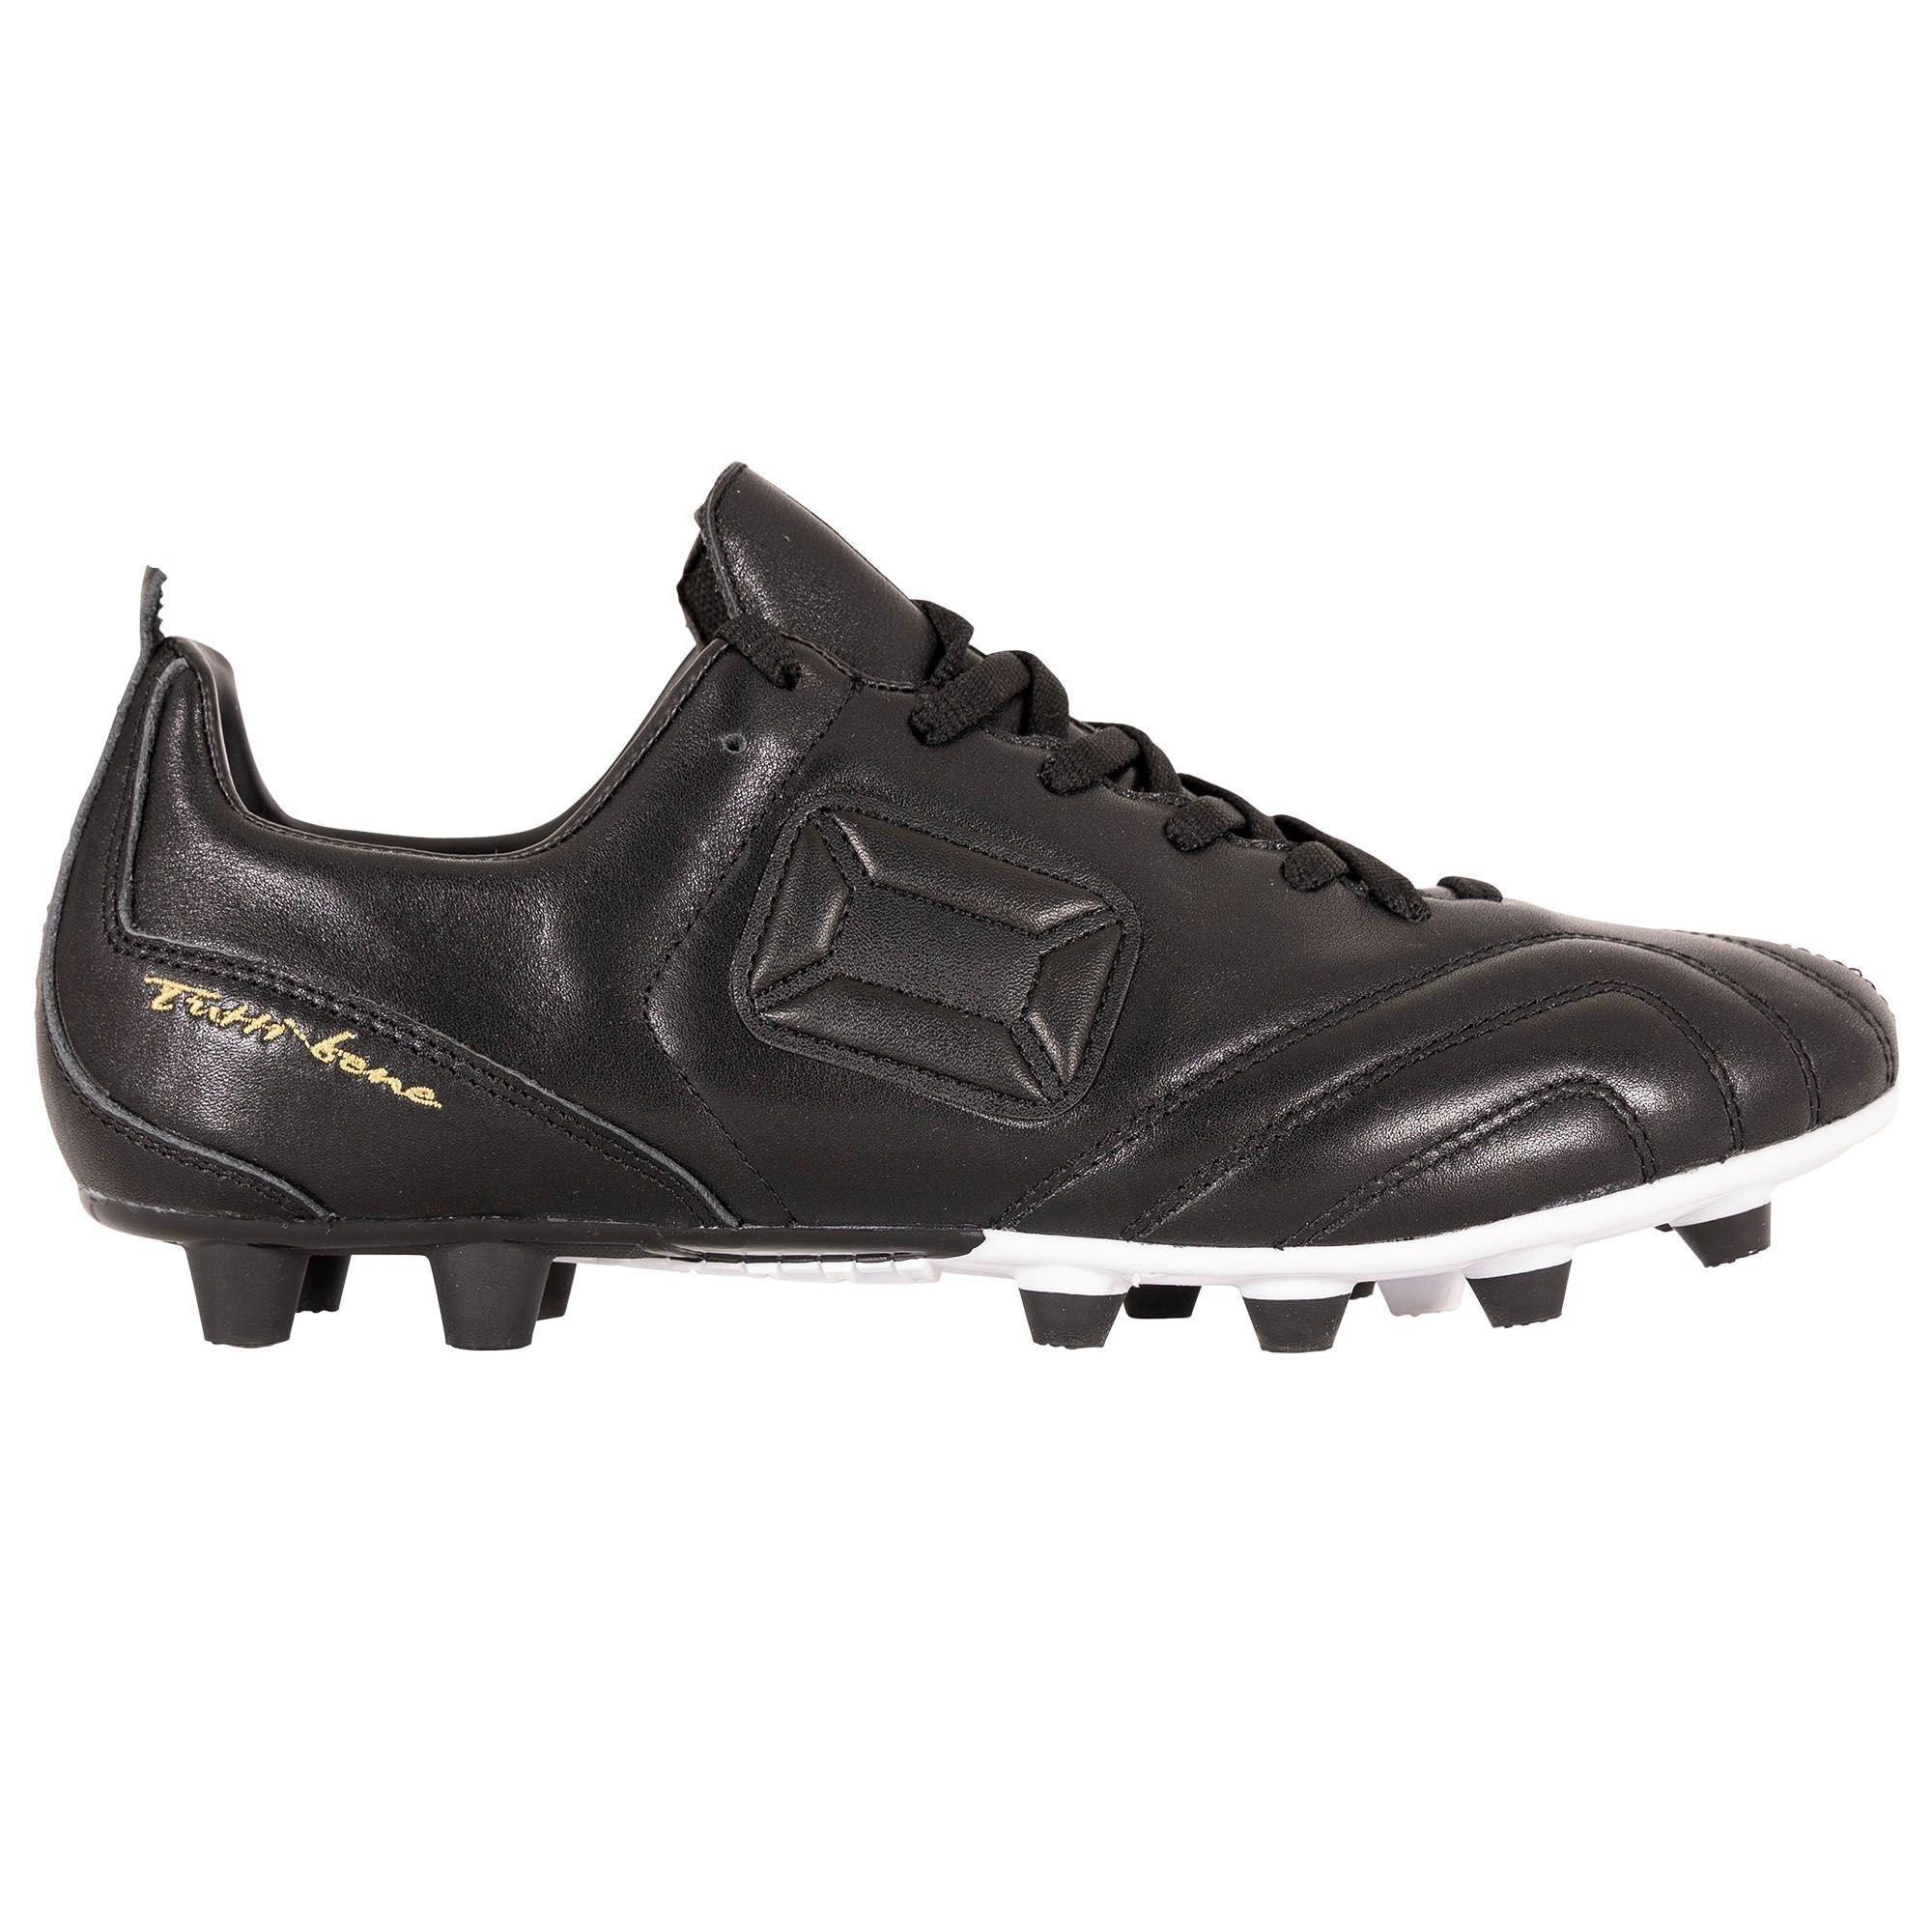 Stannol  chaussures de football terre ultra ferme  nibbio nero 